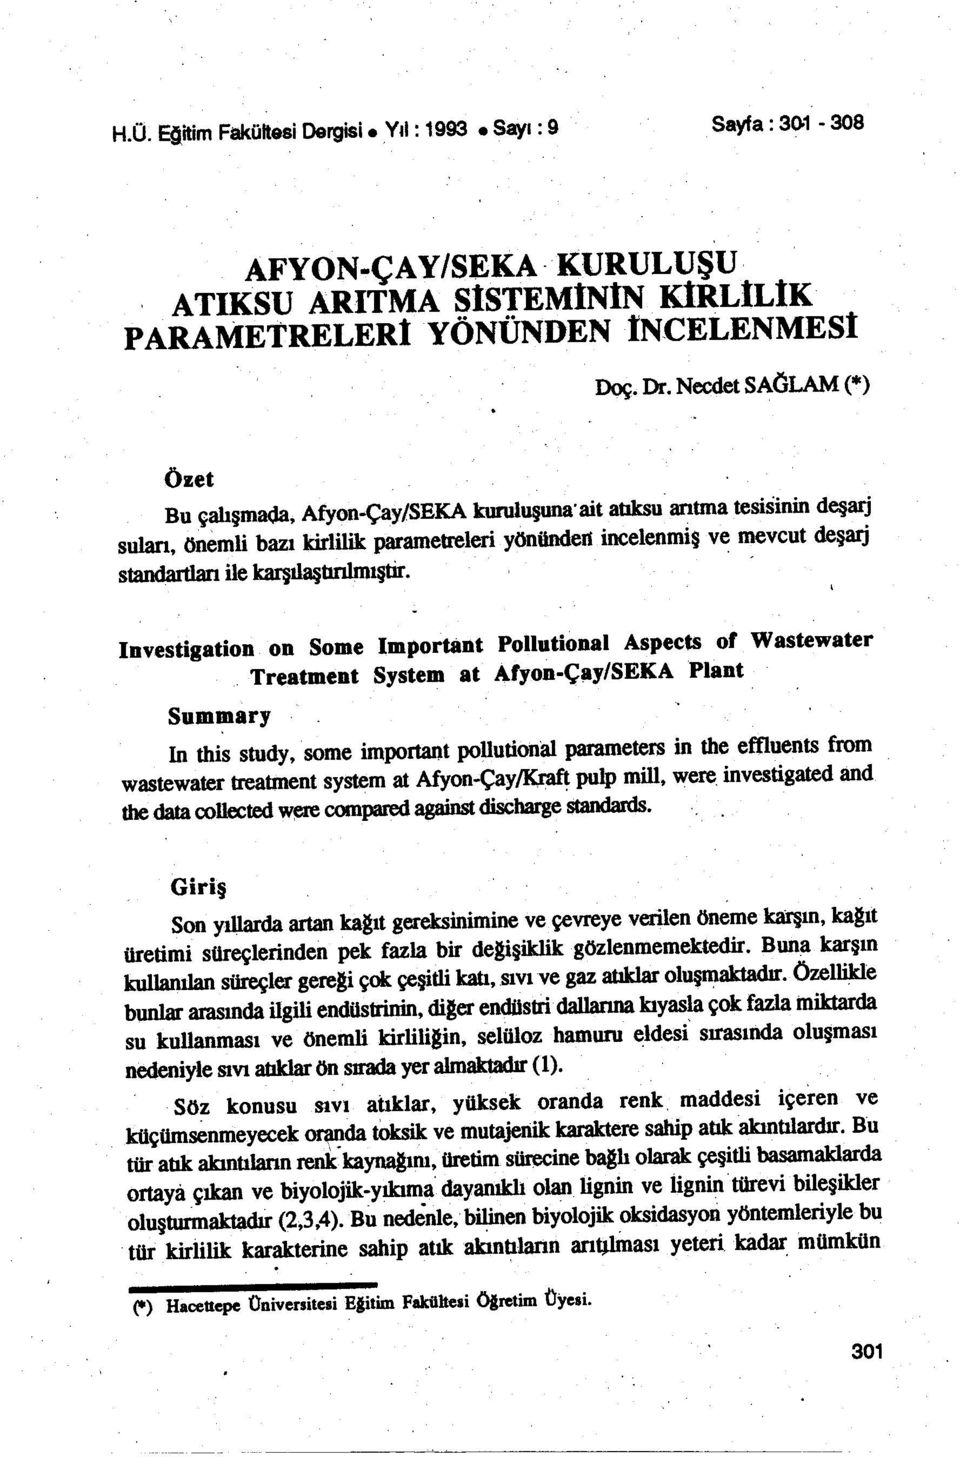 Poııutonal Aspects of Wastewater Treatment System at Afyon-Çay/SEKAPlant Summary n ths study, some mportant pollutooa!